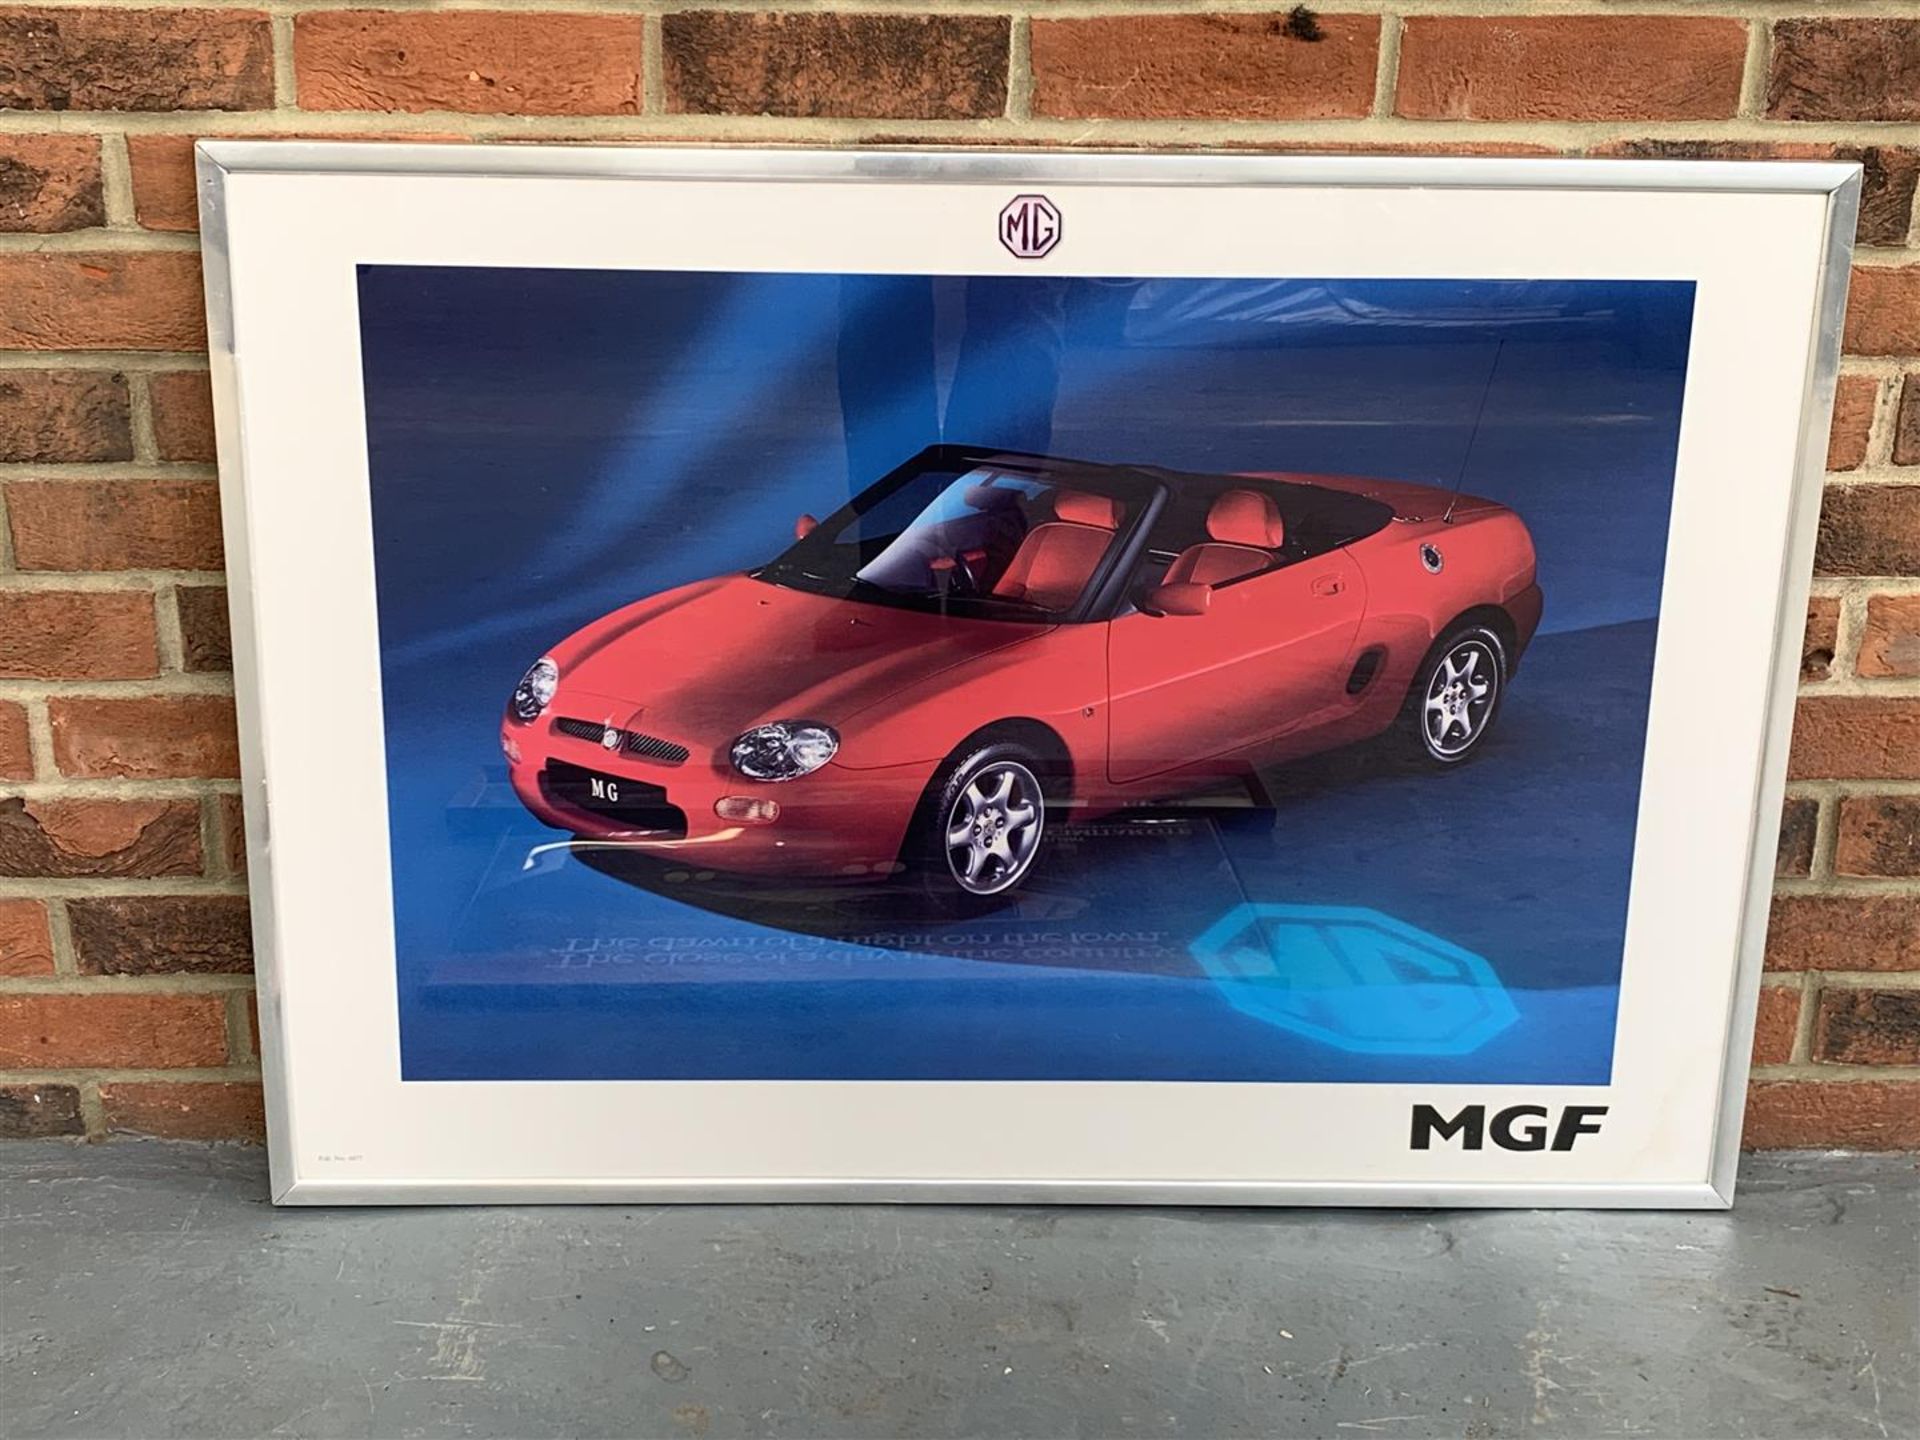 Original 1995 MG-F Poster & Three Motoring Prints (4)